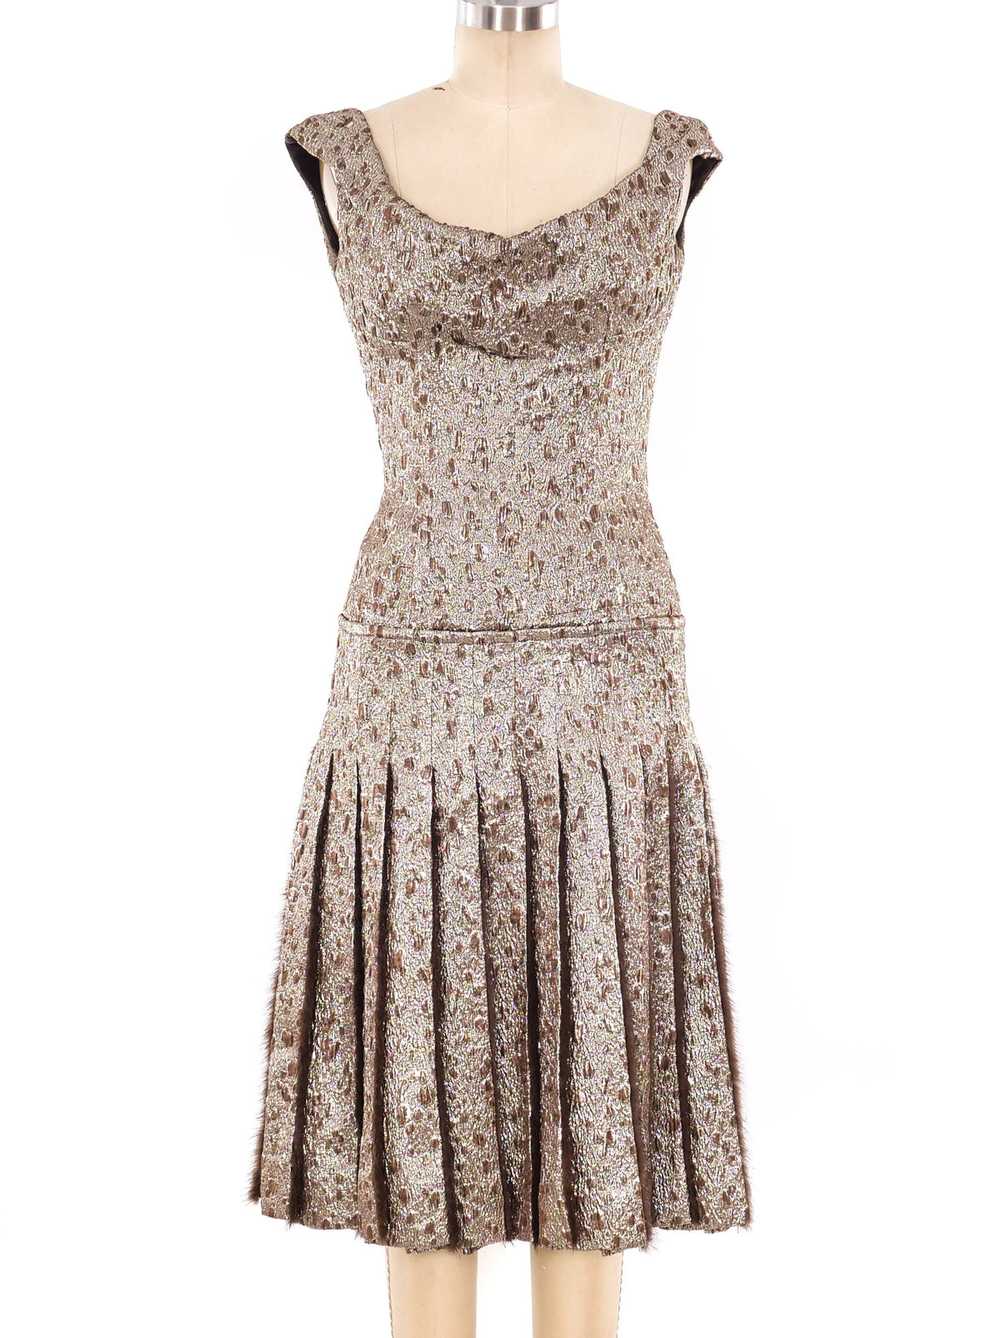 Fur Trimmed Metallic Brocade Dress - image 1